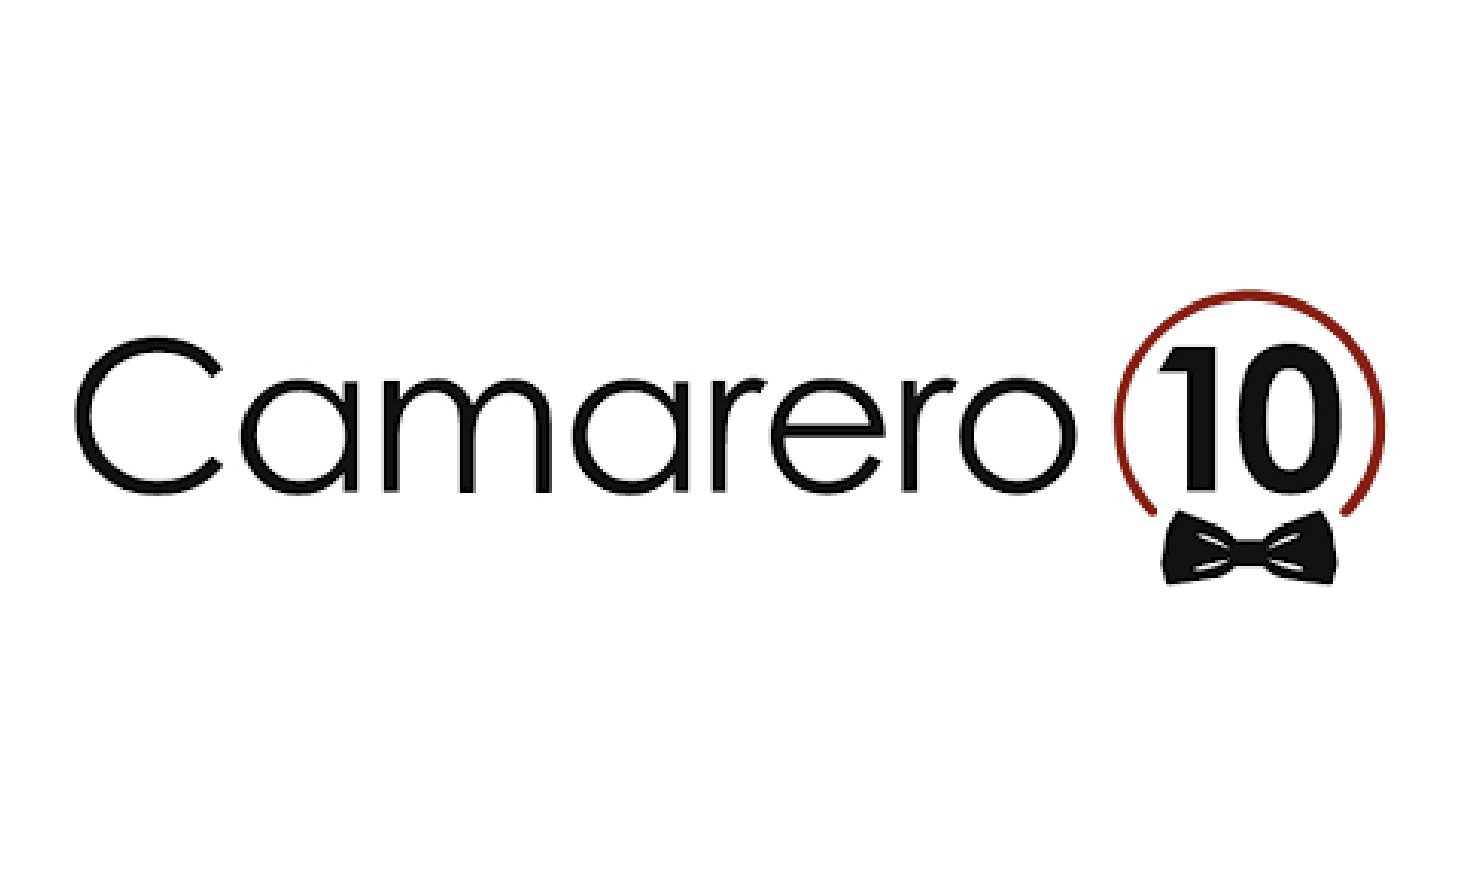 Camarero10 logo